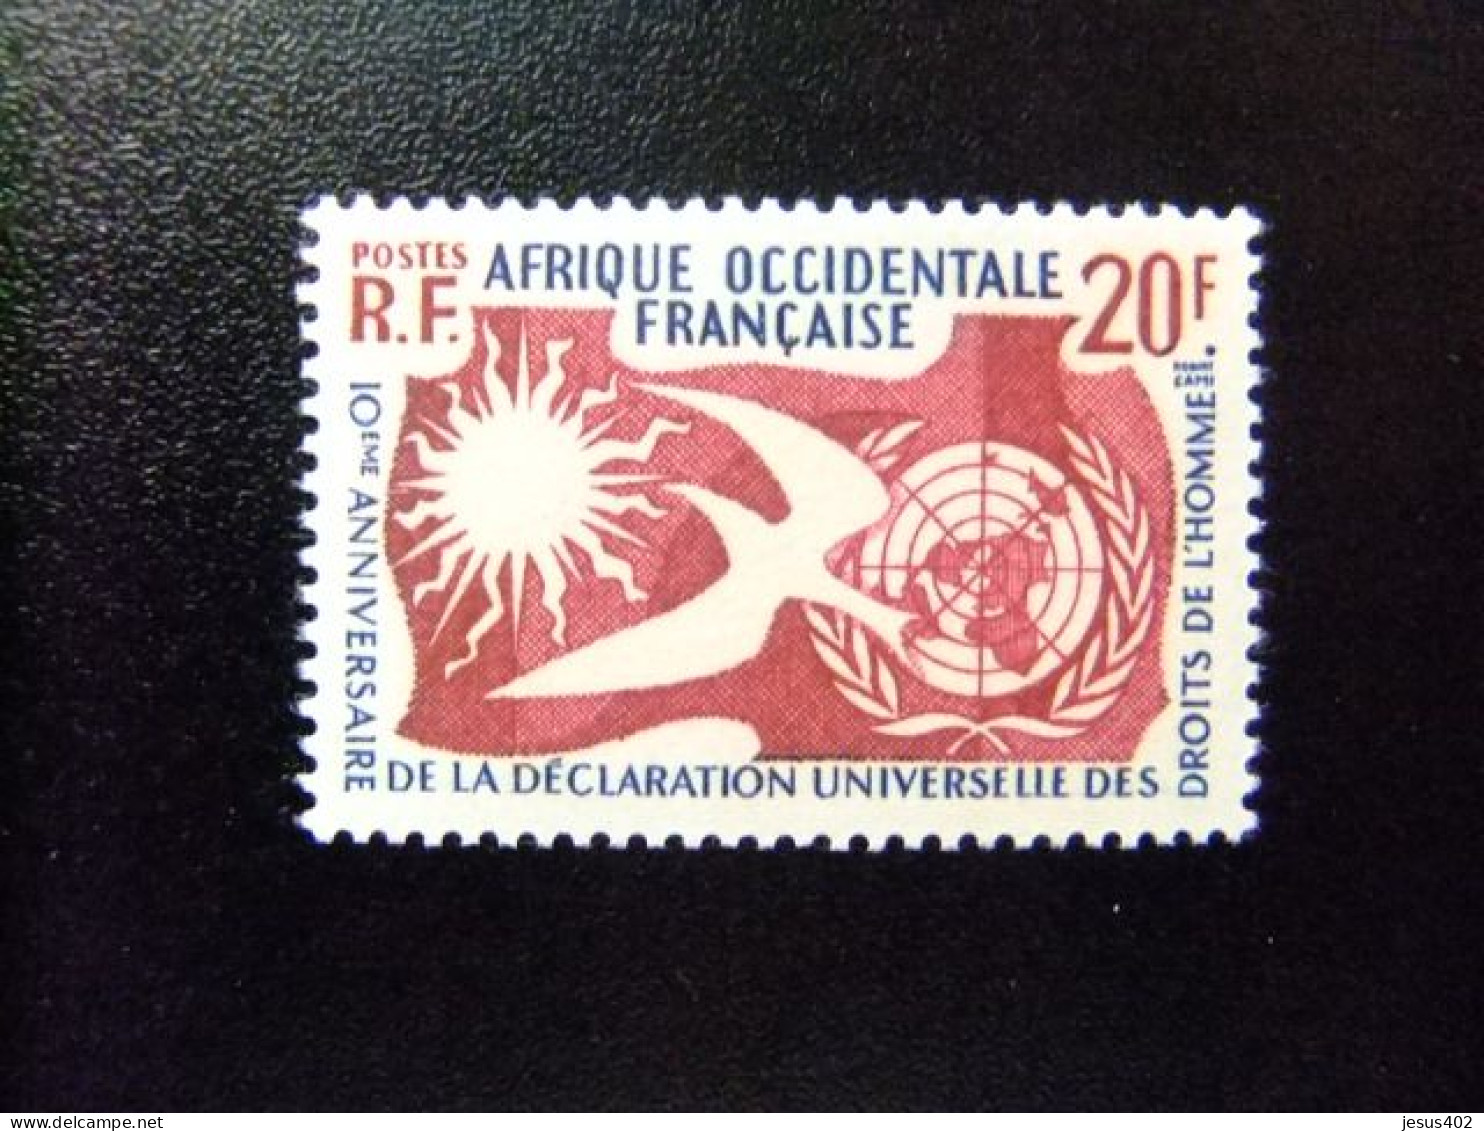 56 AFRIQUE OCCIDENTALE FRANCAISE (A.O.F.) 1958 / O.N.U. / YVERT 74 MNH - Ongebruikt